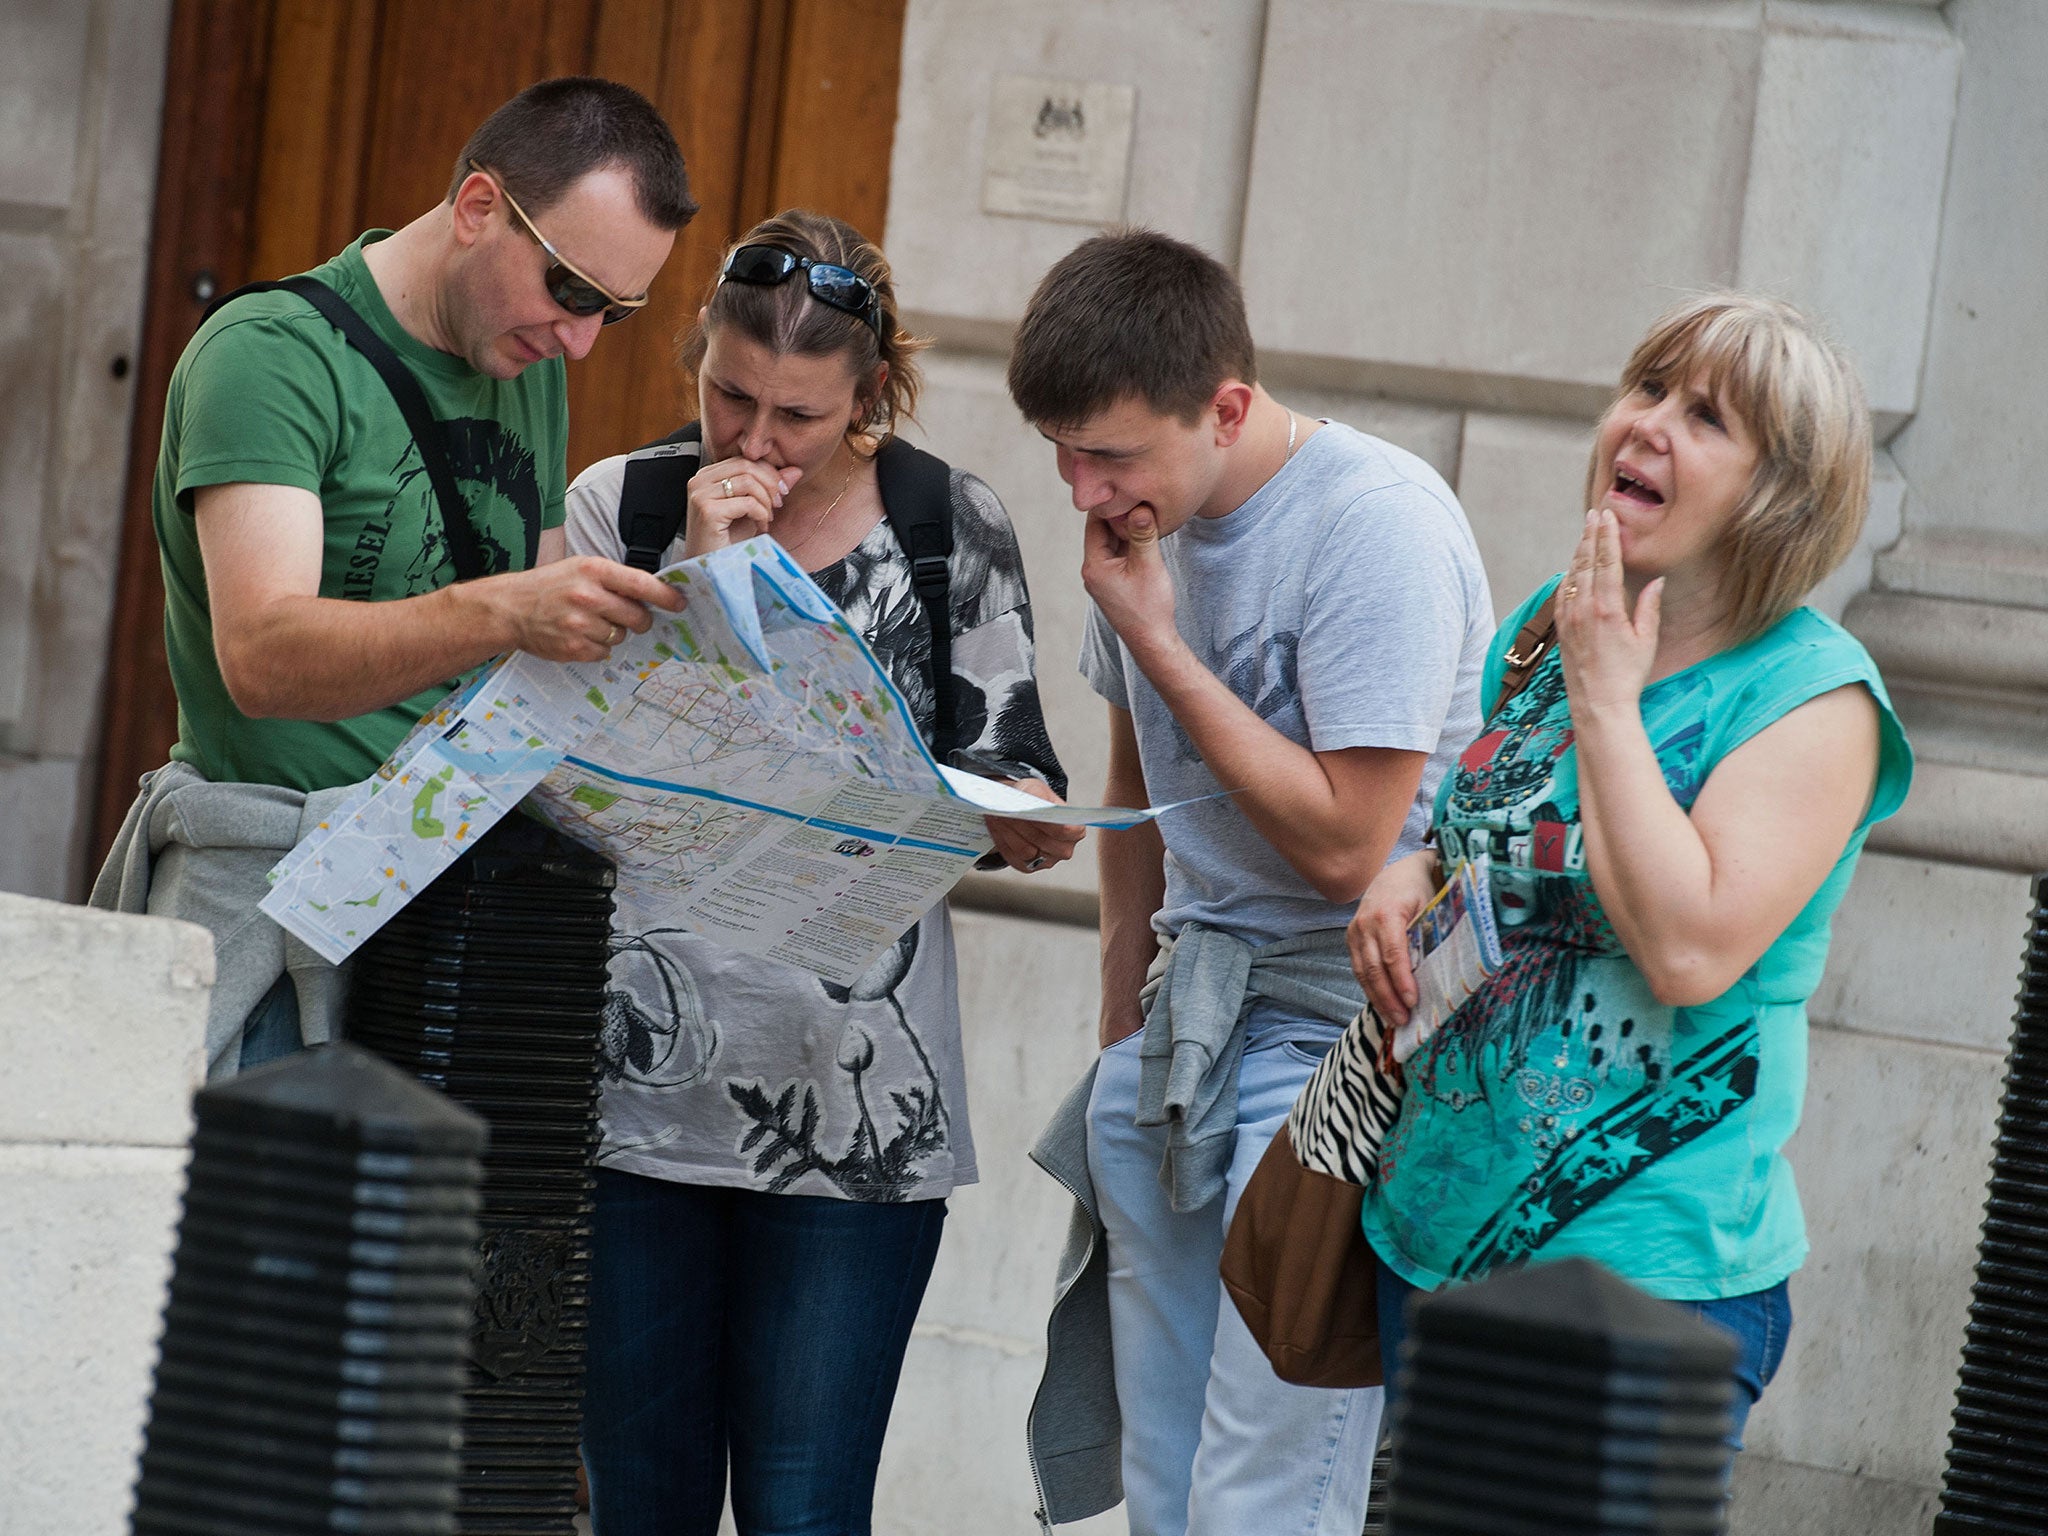 Tourists examine a map.